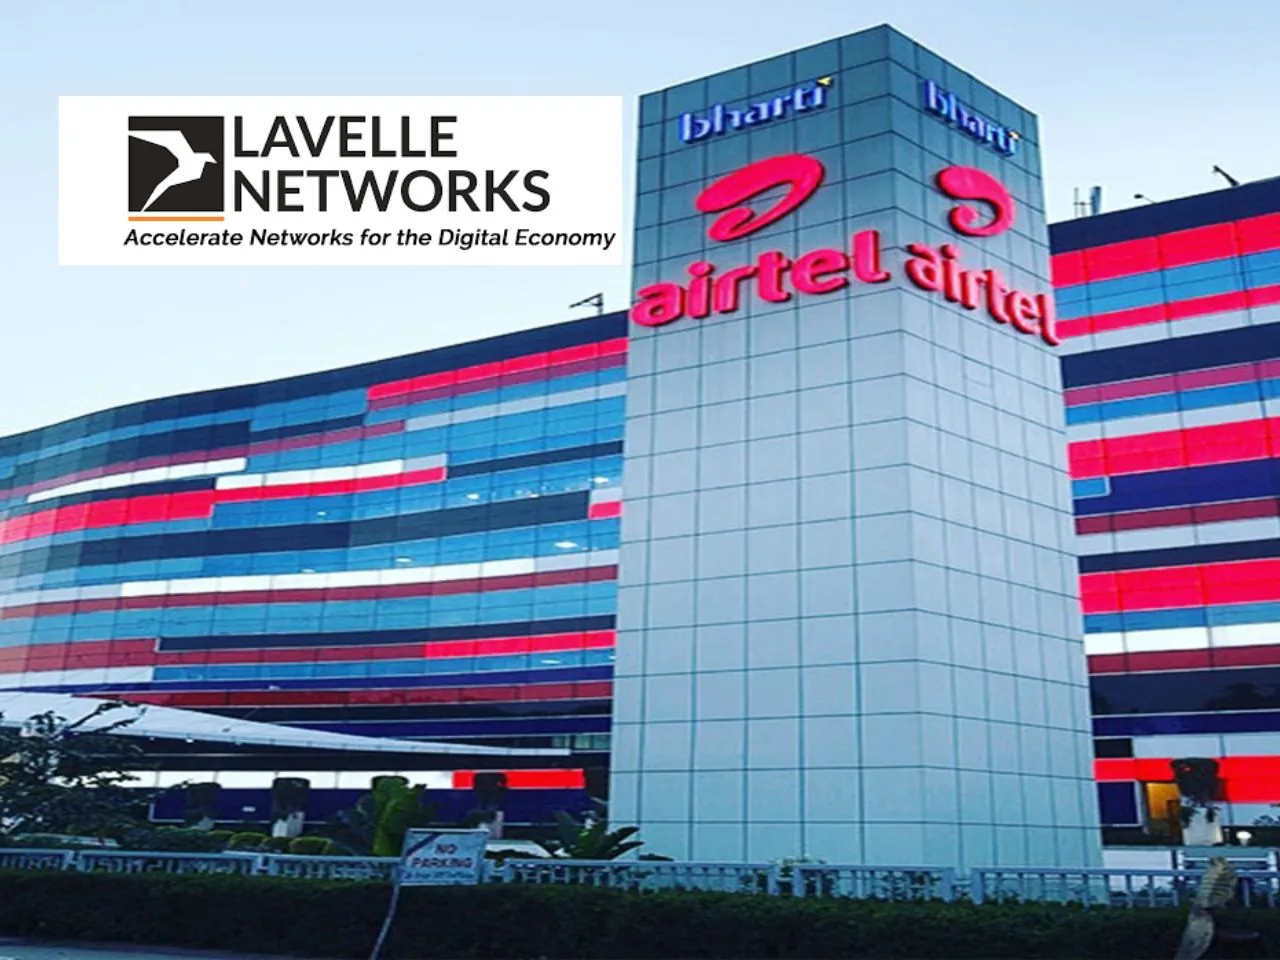 Lavelle Networks